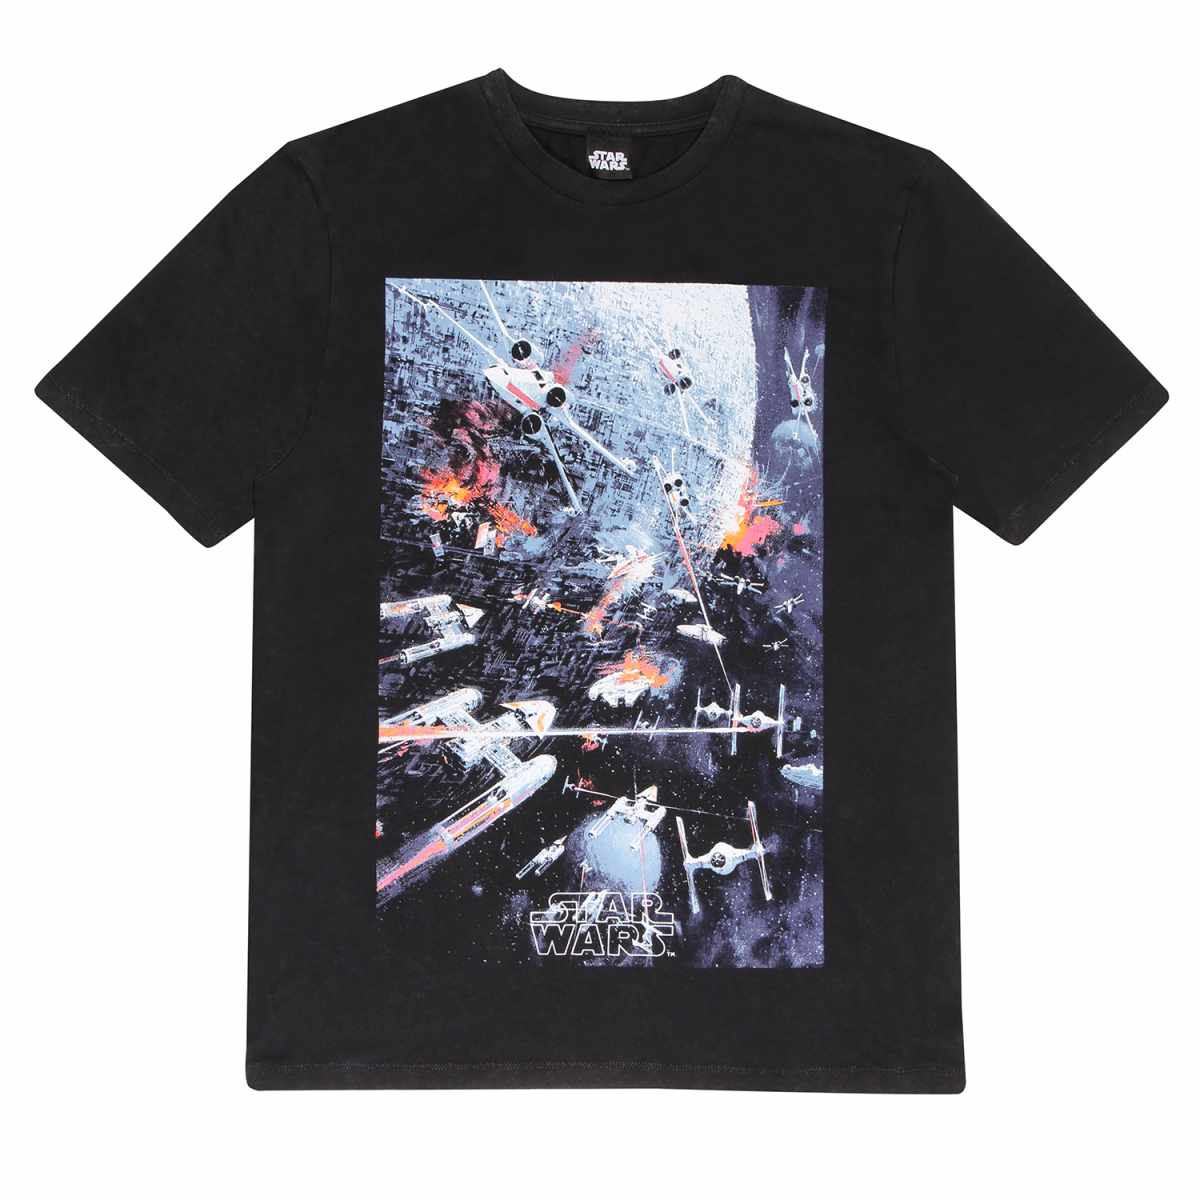 Star Wars Space Wars T-Shirt